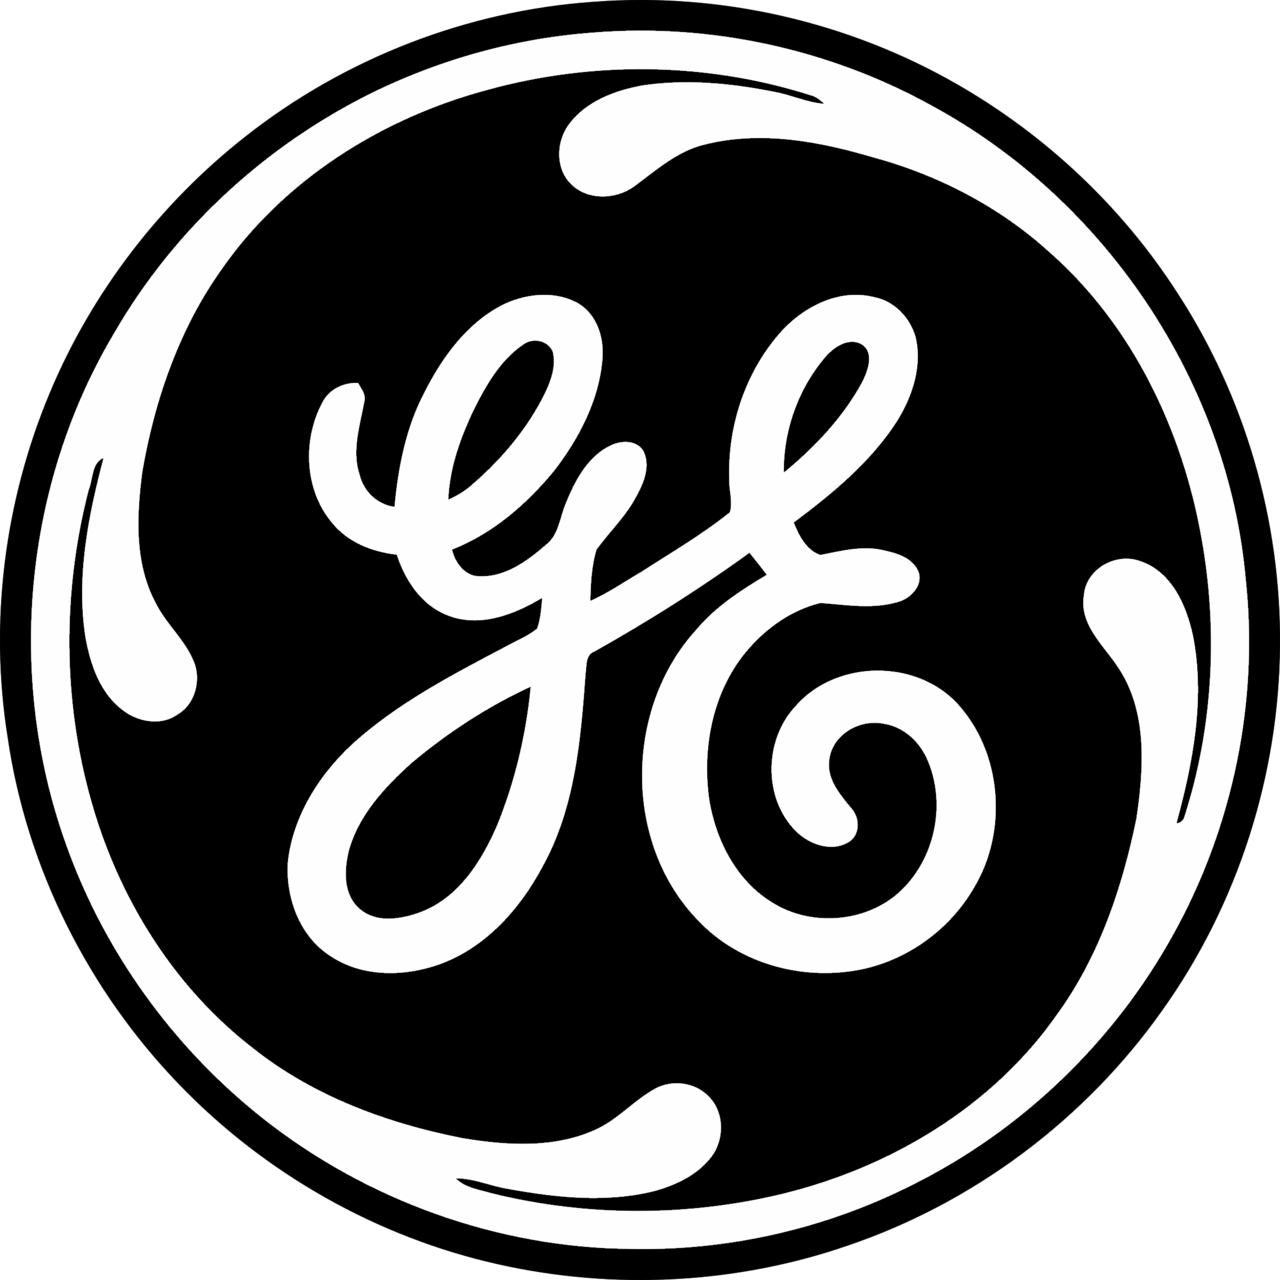 The logo for GE Digital